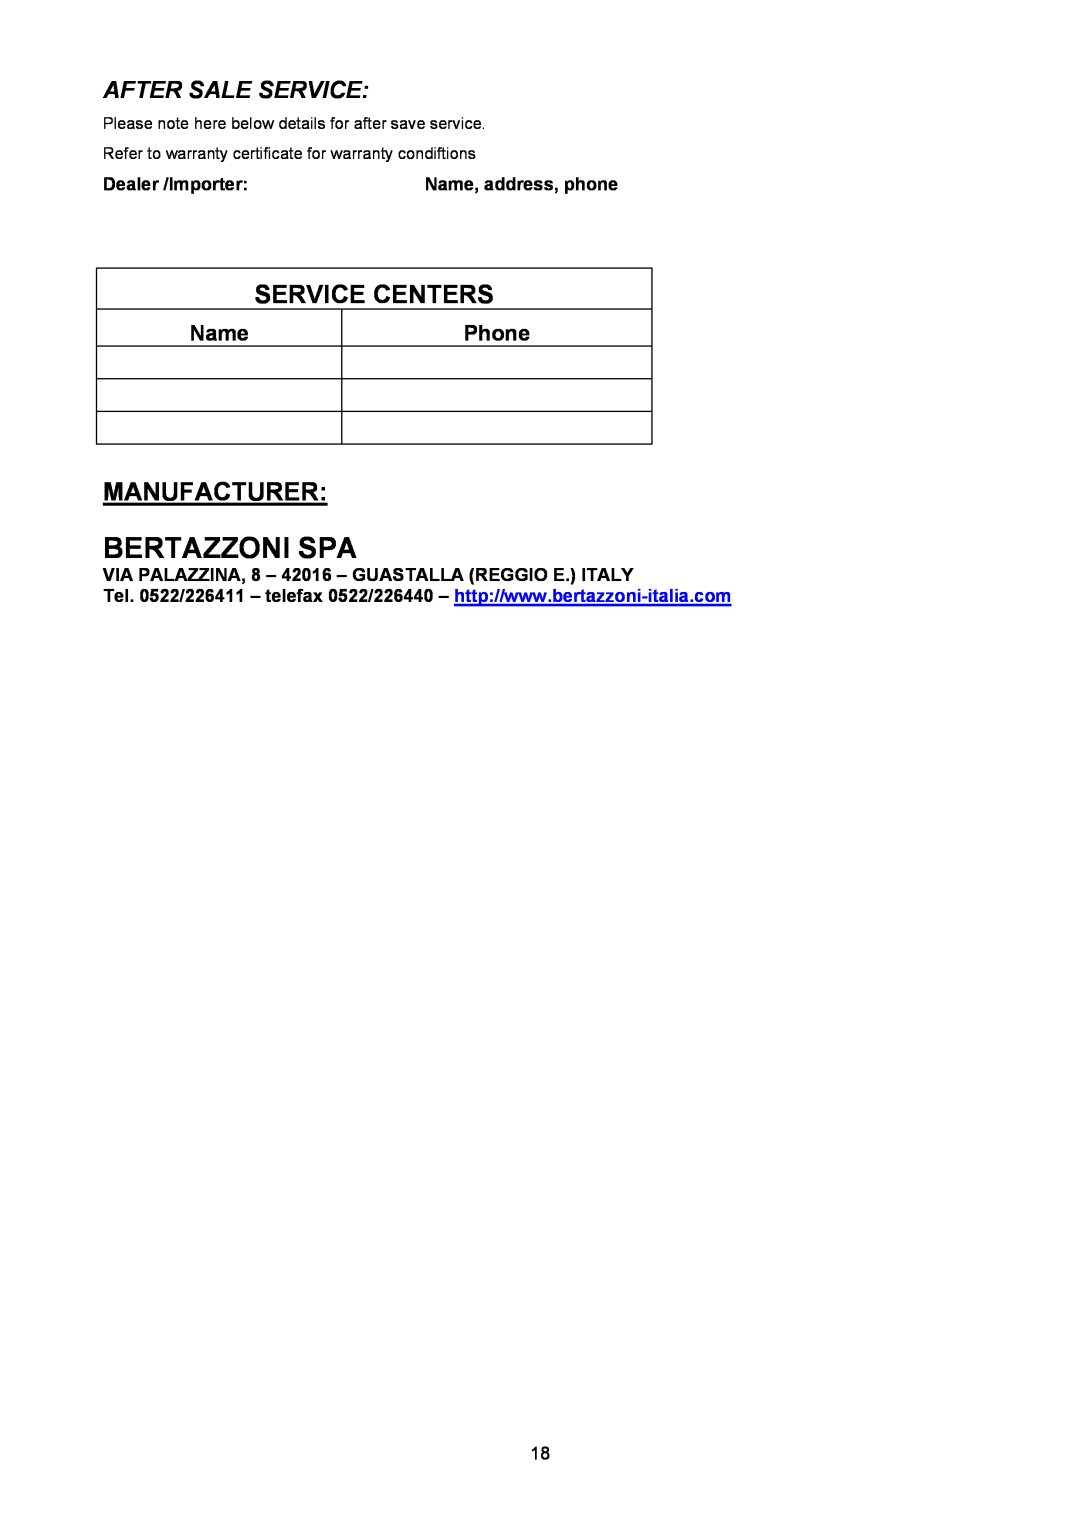 Bertazzoni X365GGVX (X36 5 00 X) manual Bertazzoni Spa, Service Centers, Manufacturer, After Sale Service, Name, Phone 